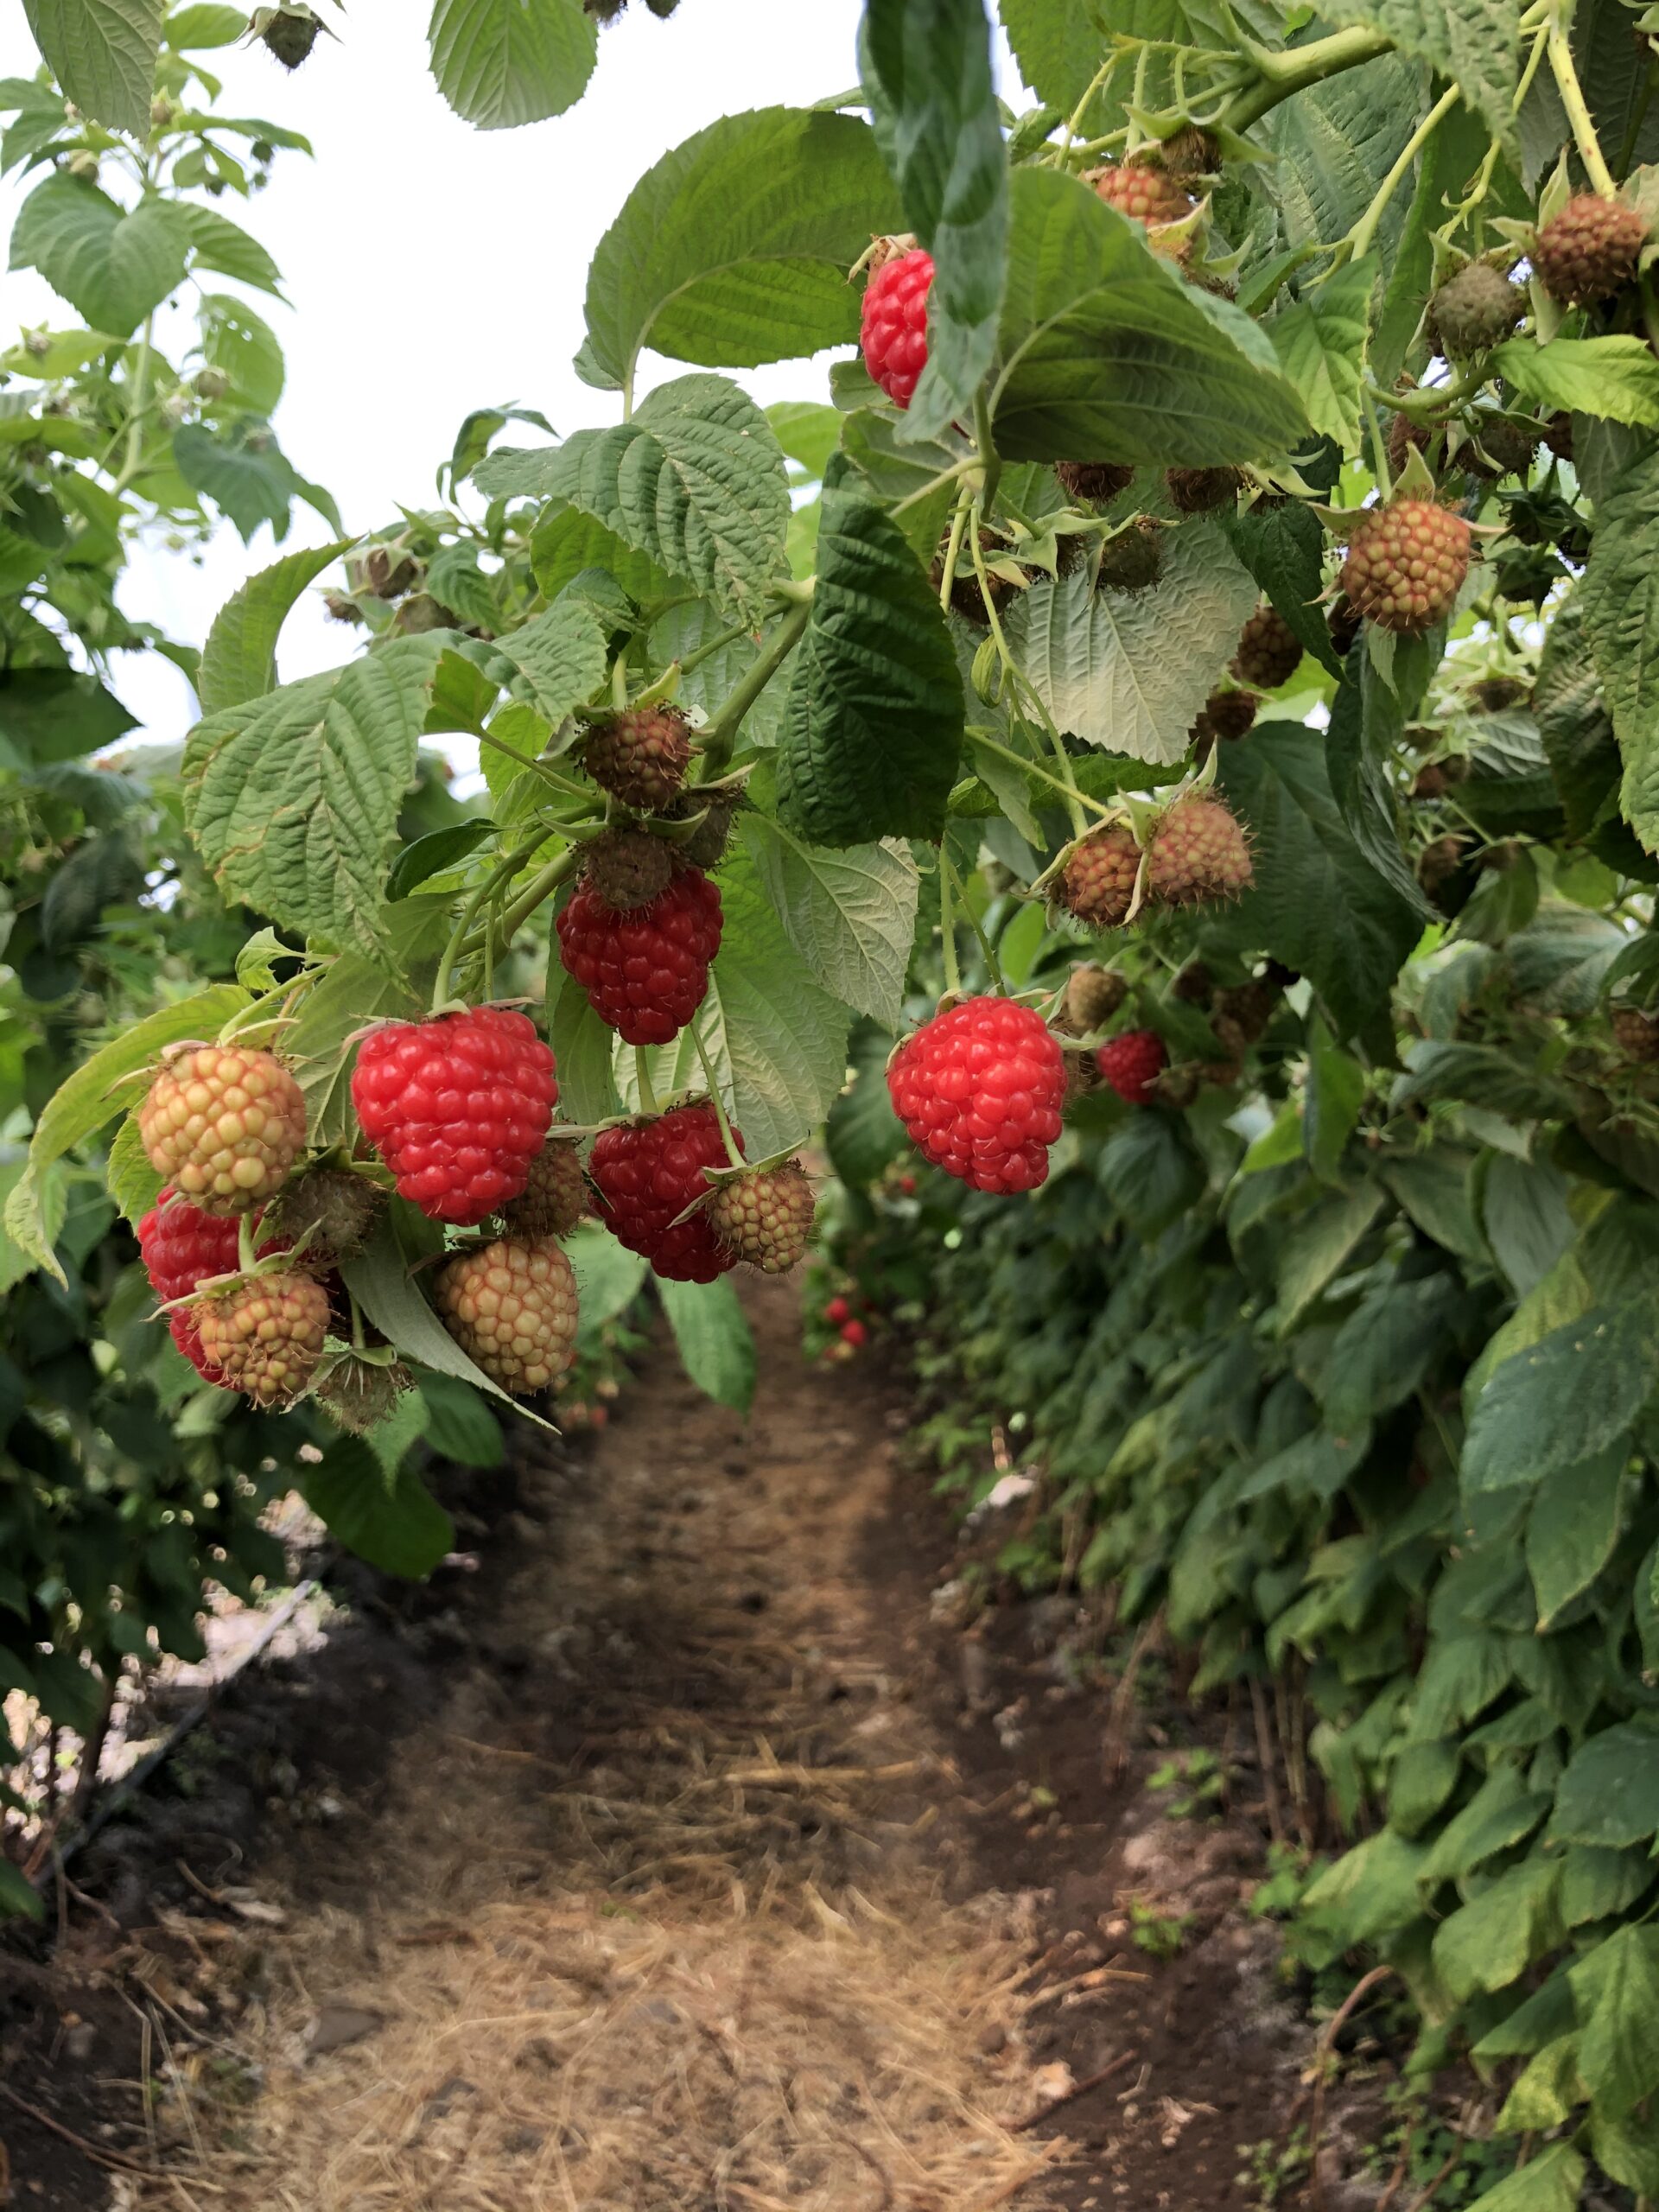 How to grow perfect raspberries